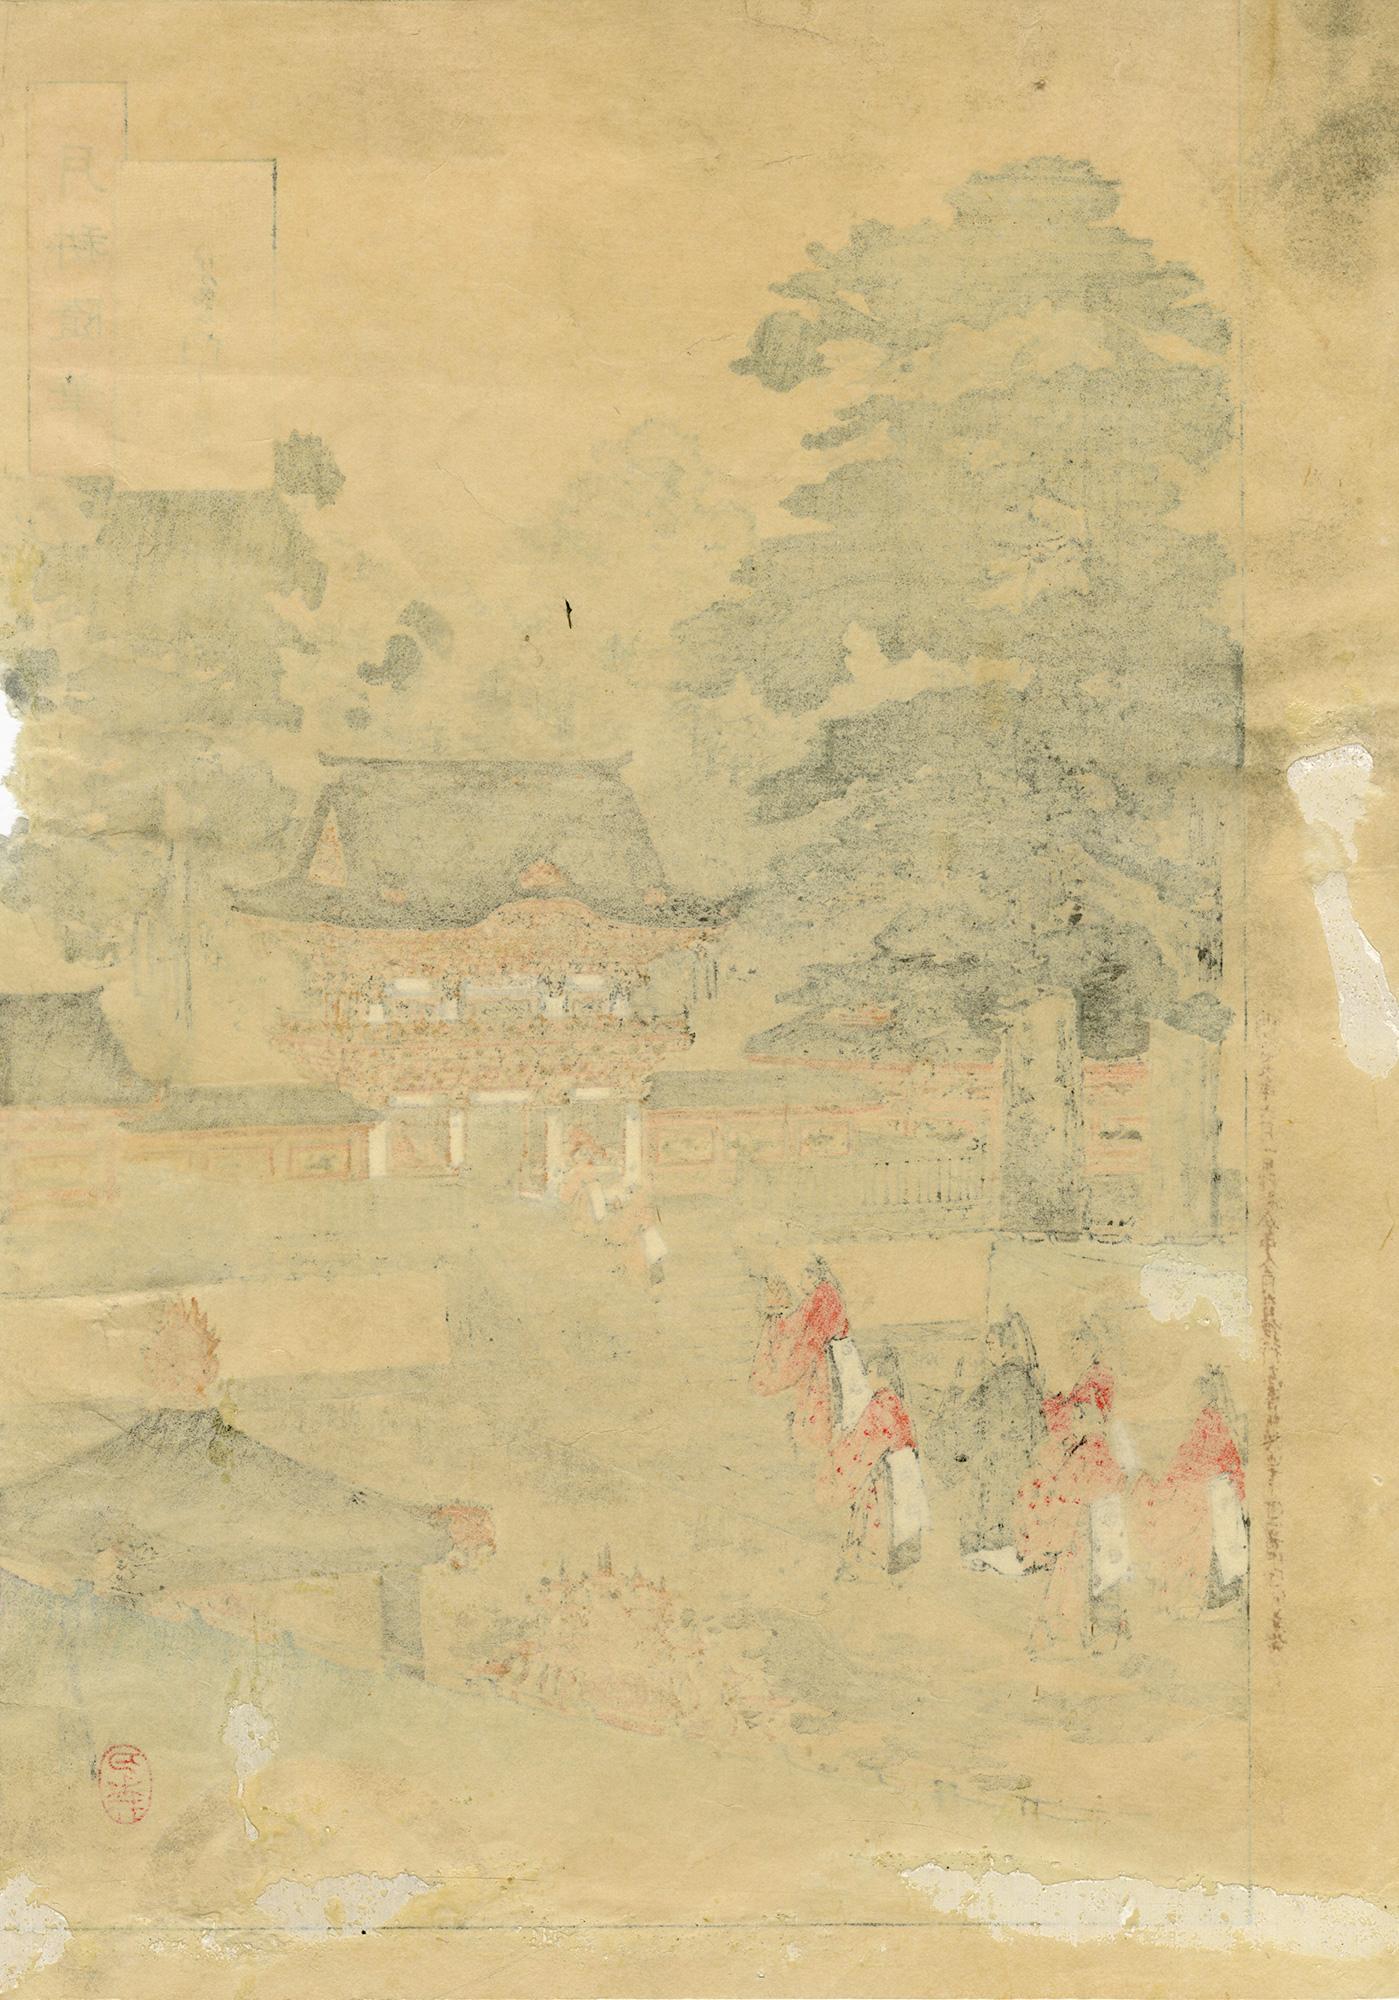 Toshogu Shrine - Print by Ogata Gekko